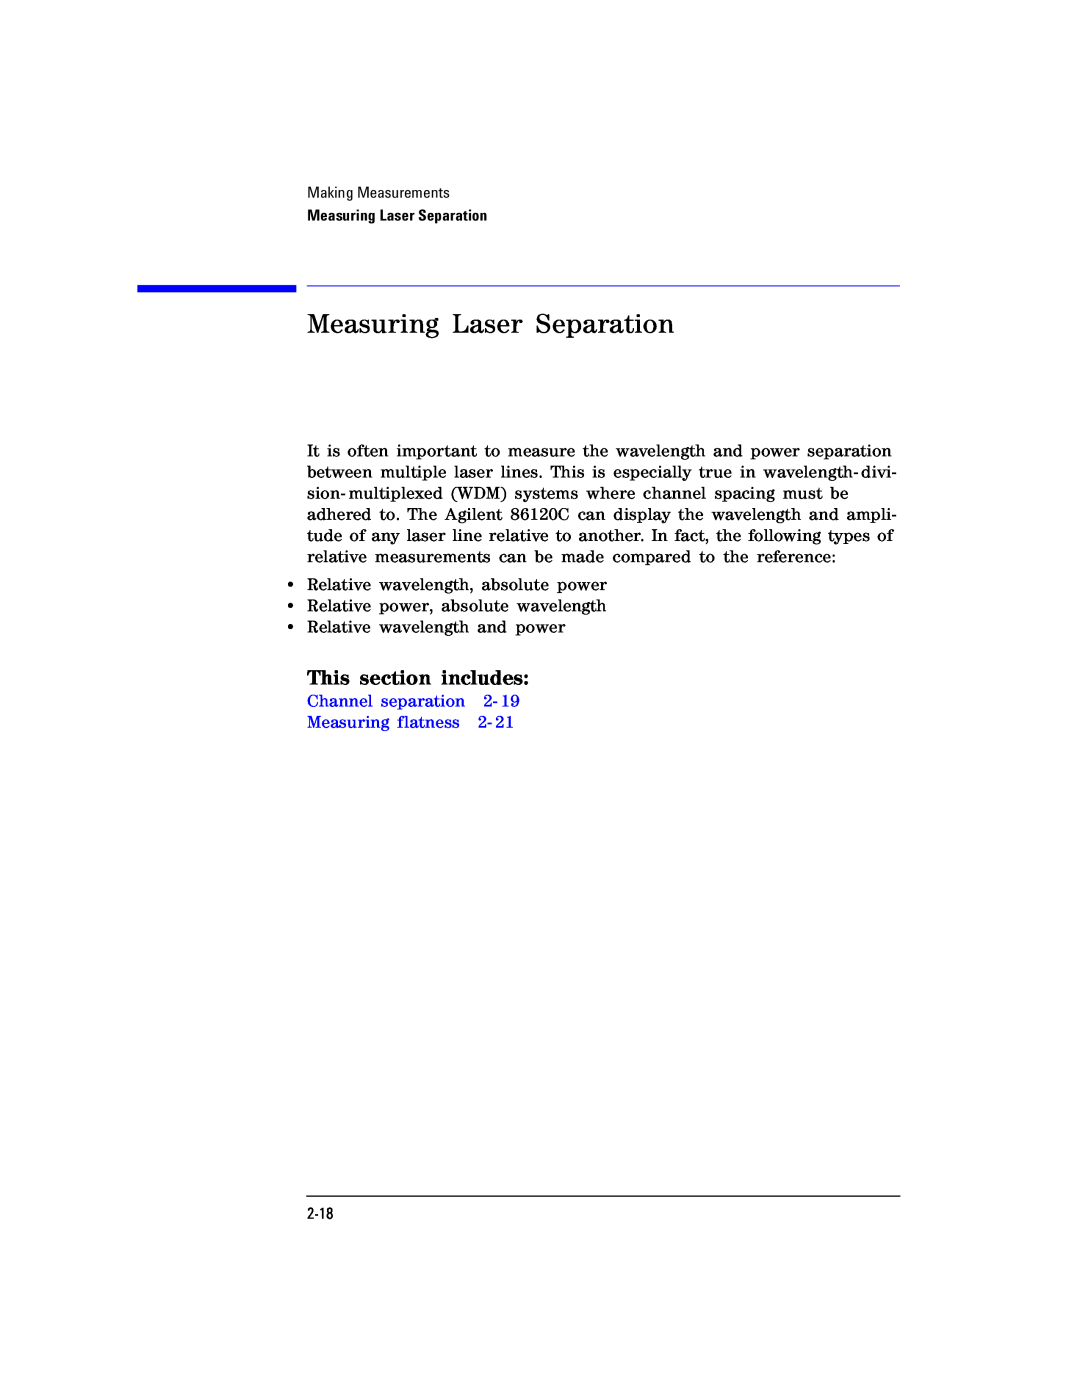 Agilent Technologies Agilent 86120C manual Measuring Laser Separation, Channel separation 2 Measuring flatness 2 